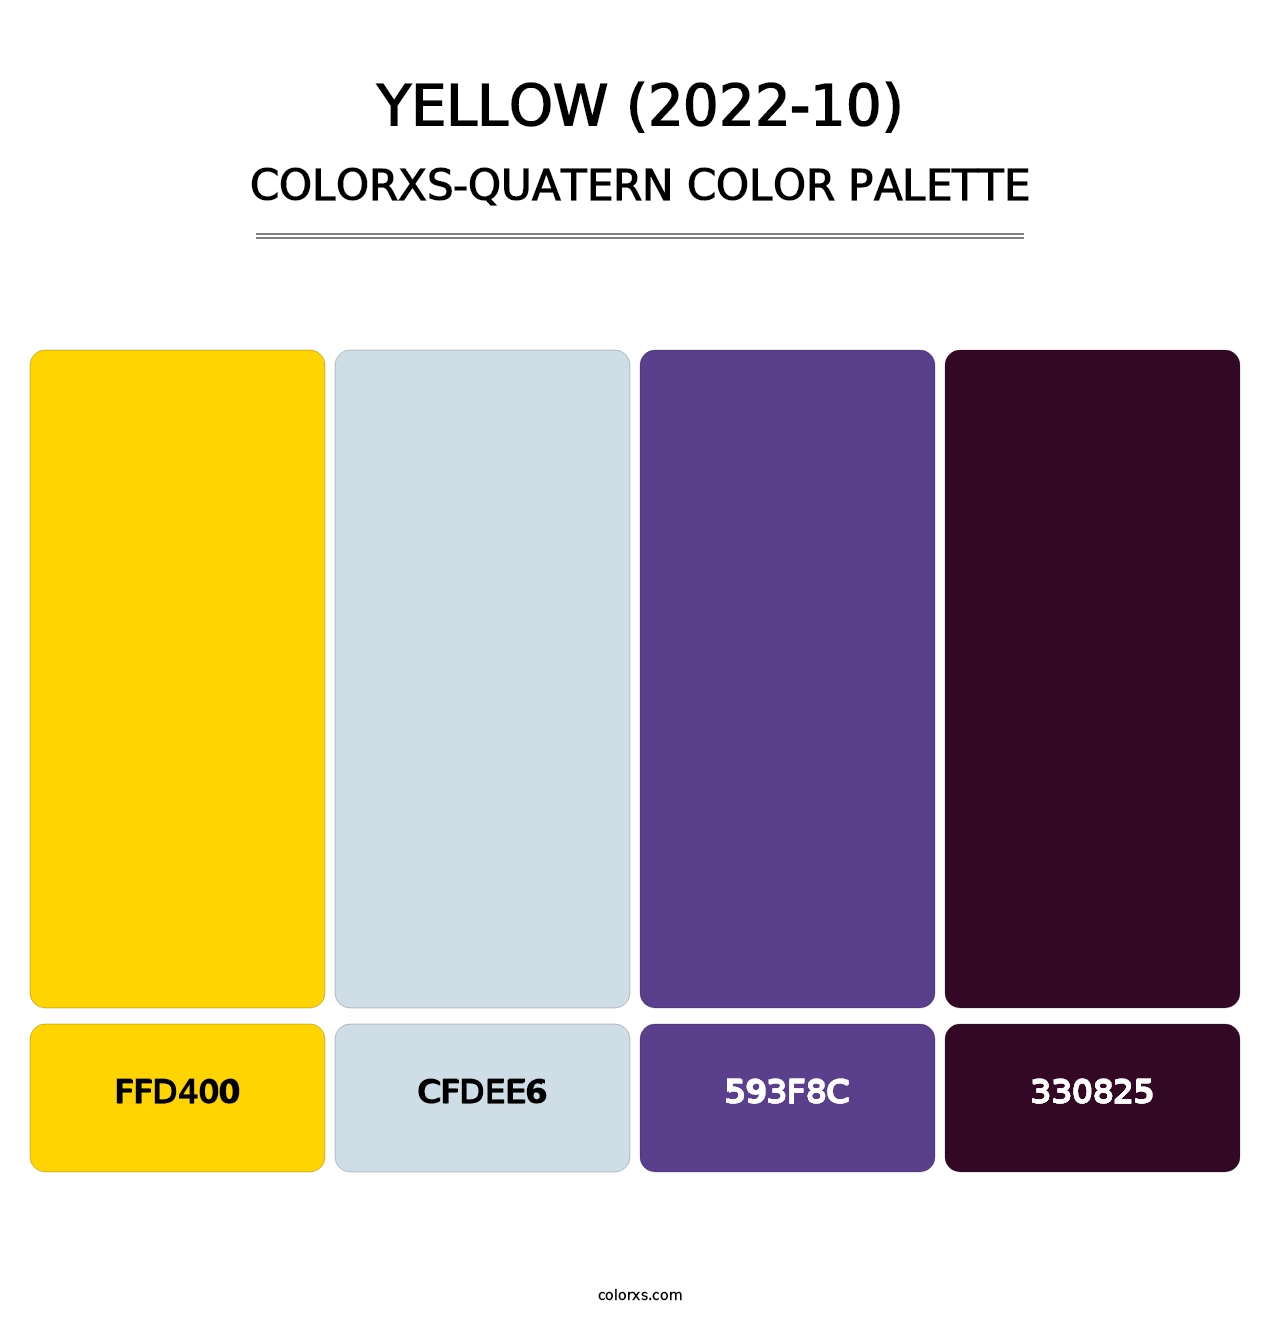 Yellow (2022-10) - Colorxs Quatern Palette